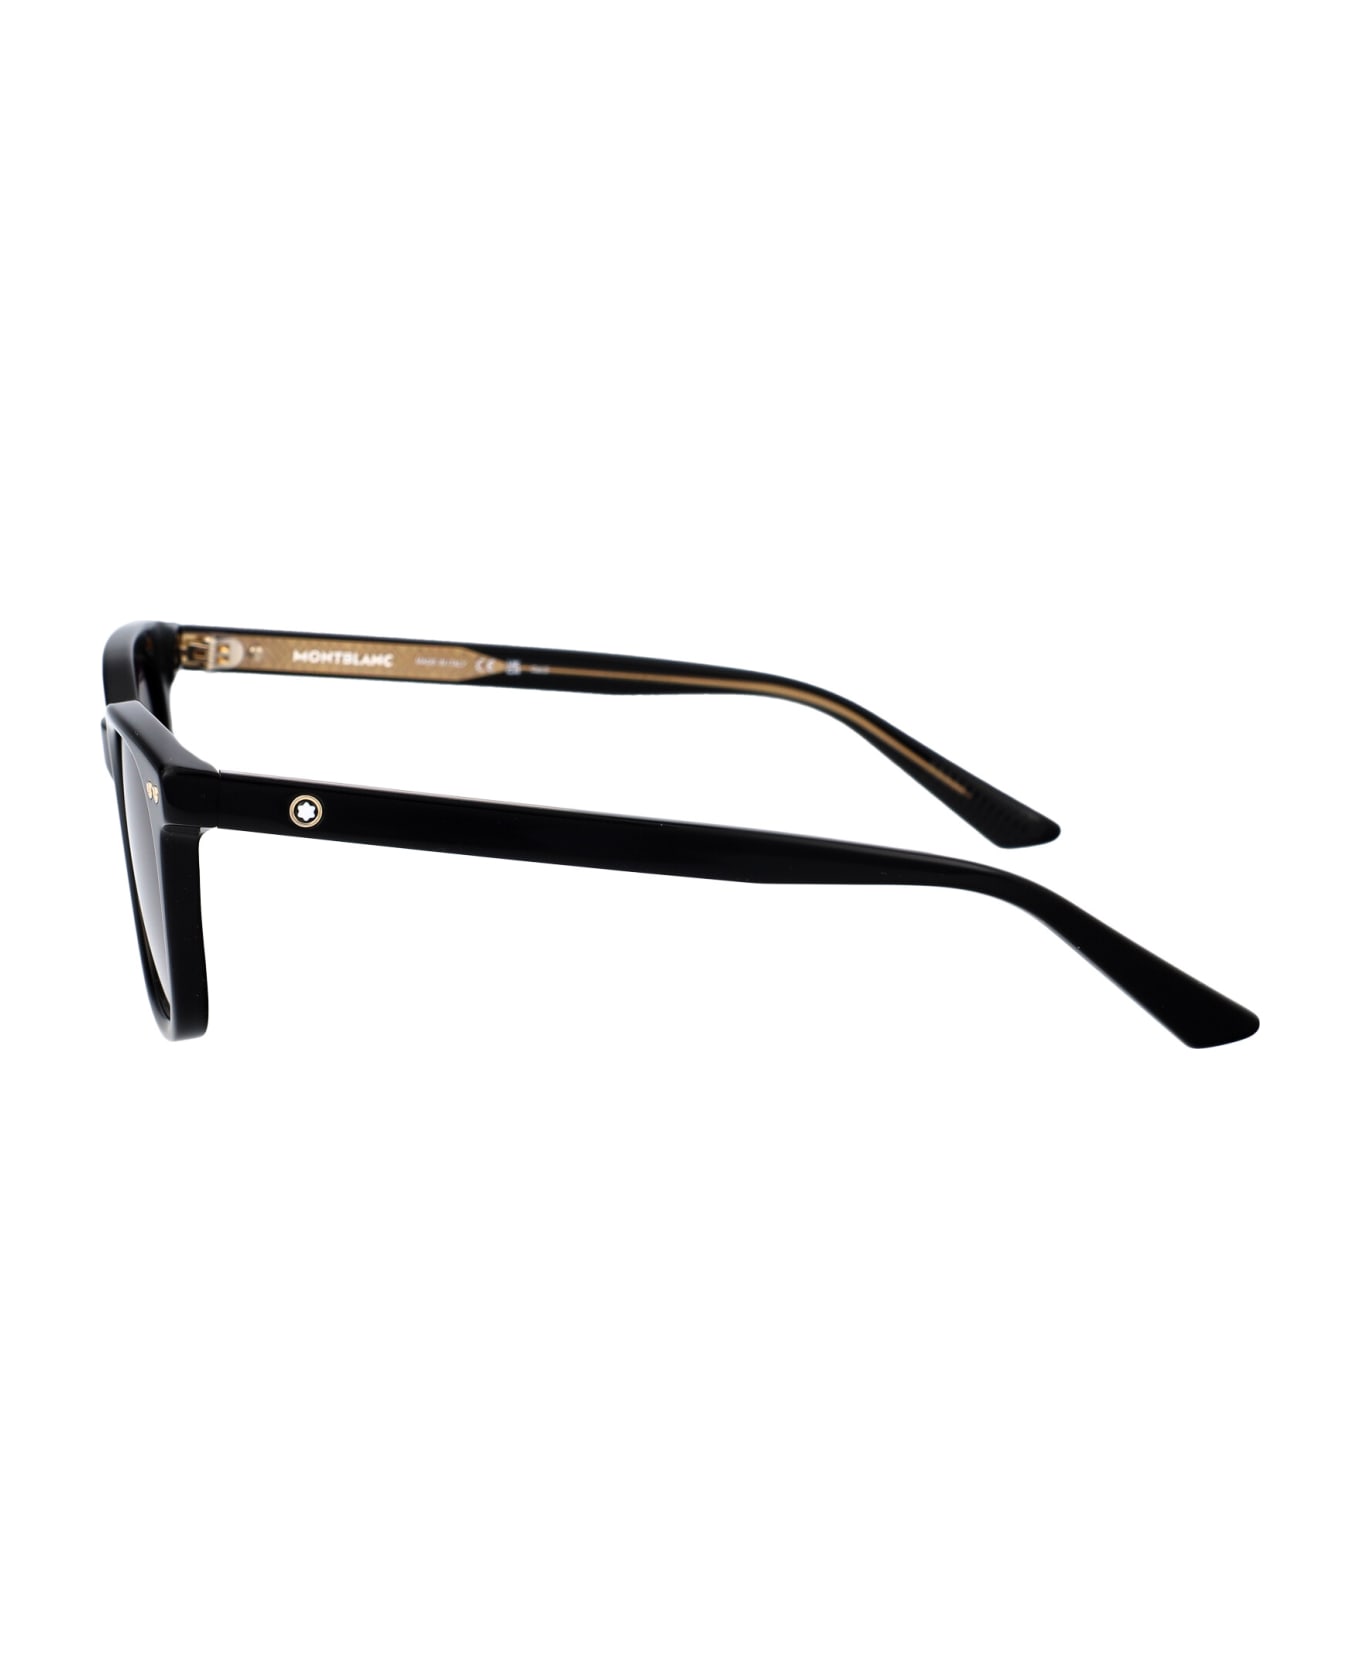 Montblanc Mb0320s Sunglasses - 001 BLACK BLACK GREY サングラス